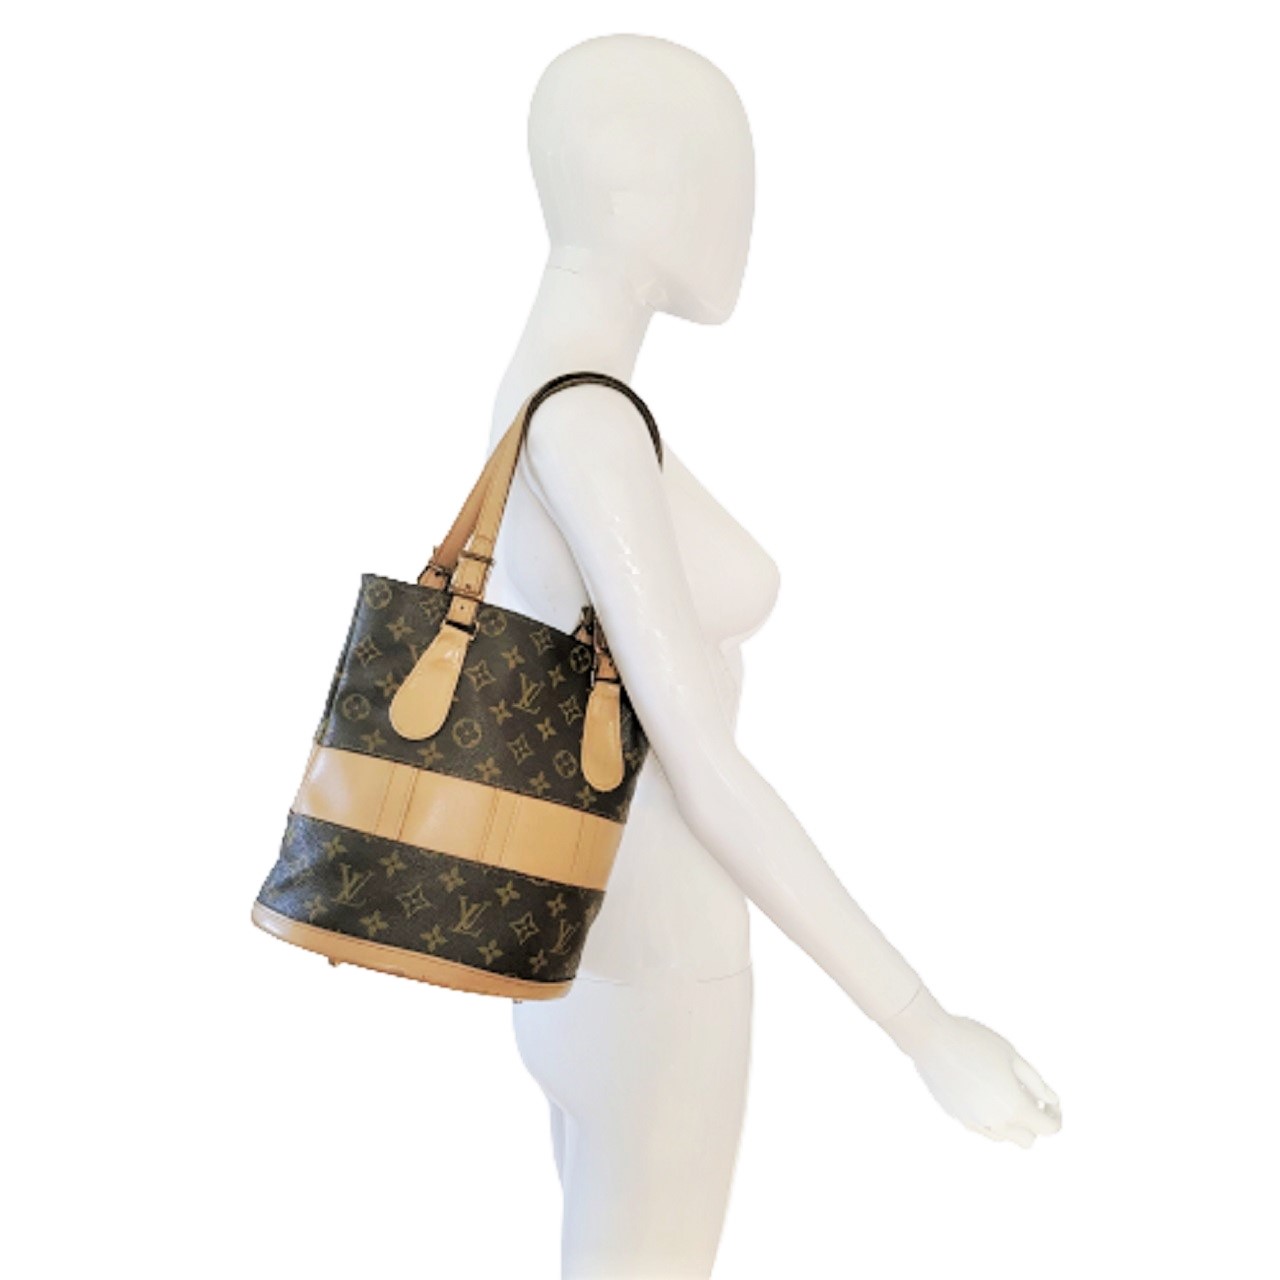 Louis Vuitton, Bags, Louis Vuitton Vintage Monogram Bowling Bag